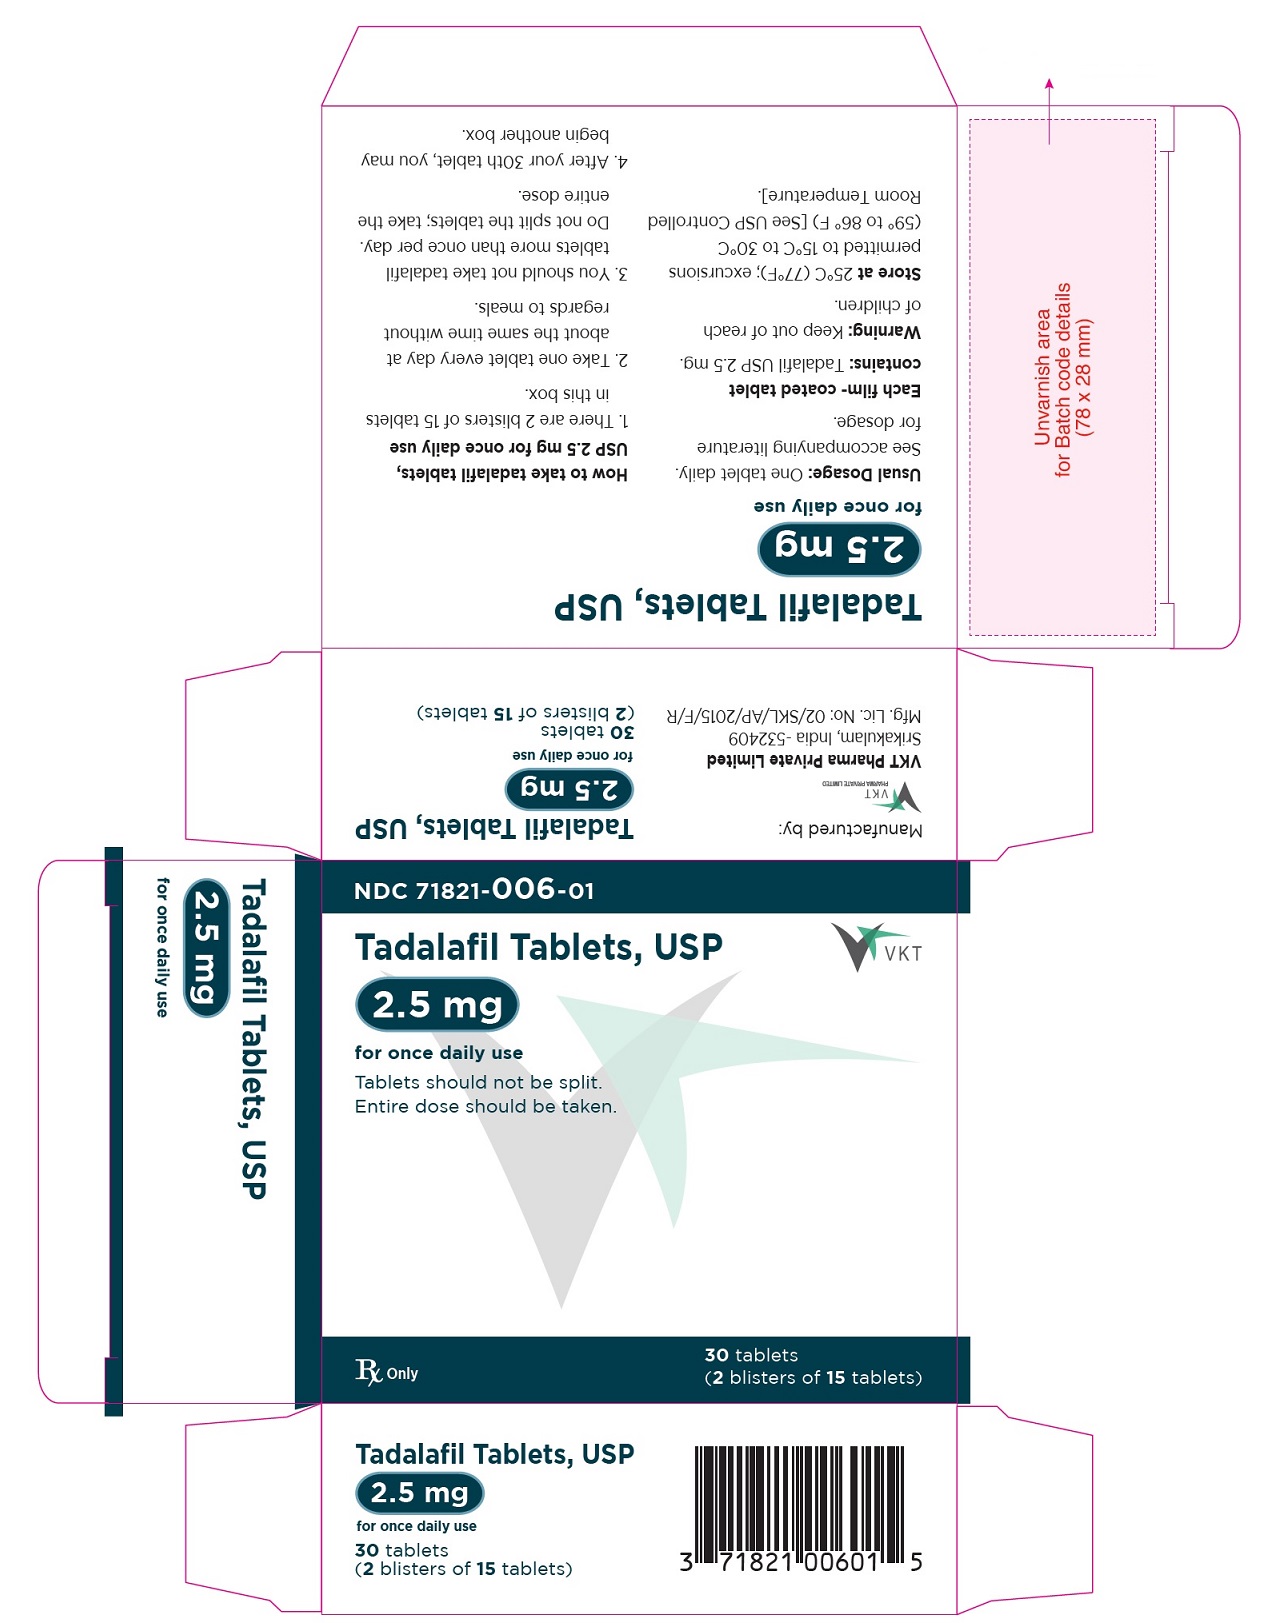 Tadalafin tablets,USP,2.5 mg - NDC-71821-006-01 - Carton Label